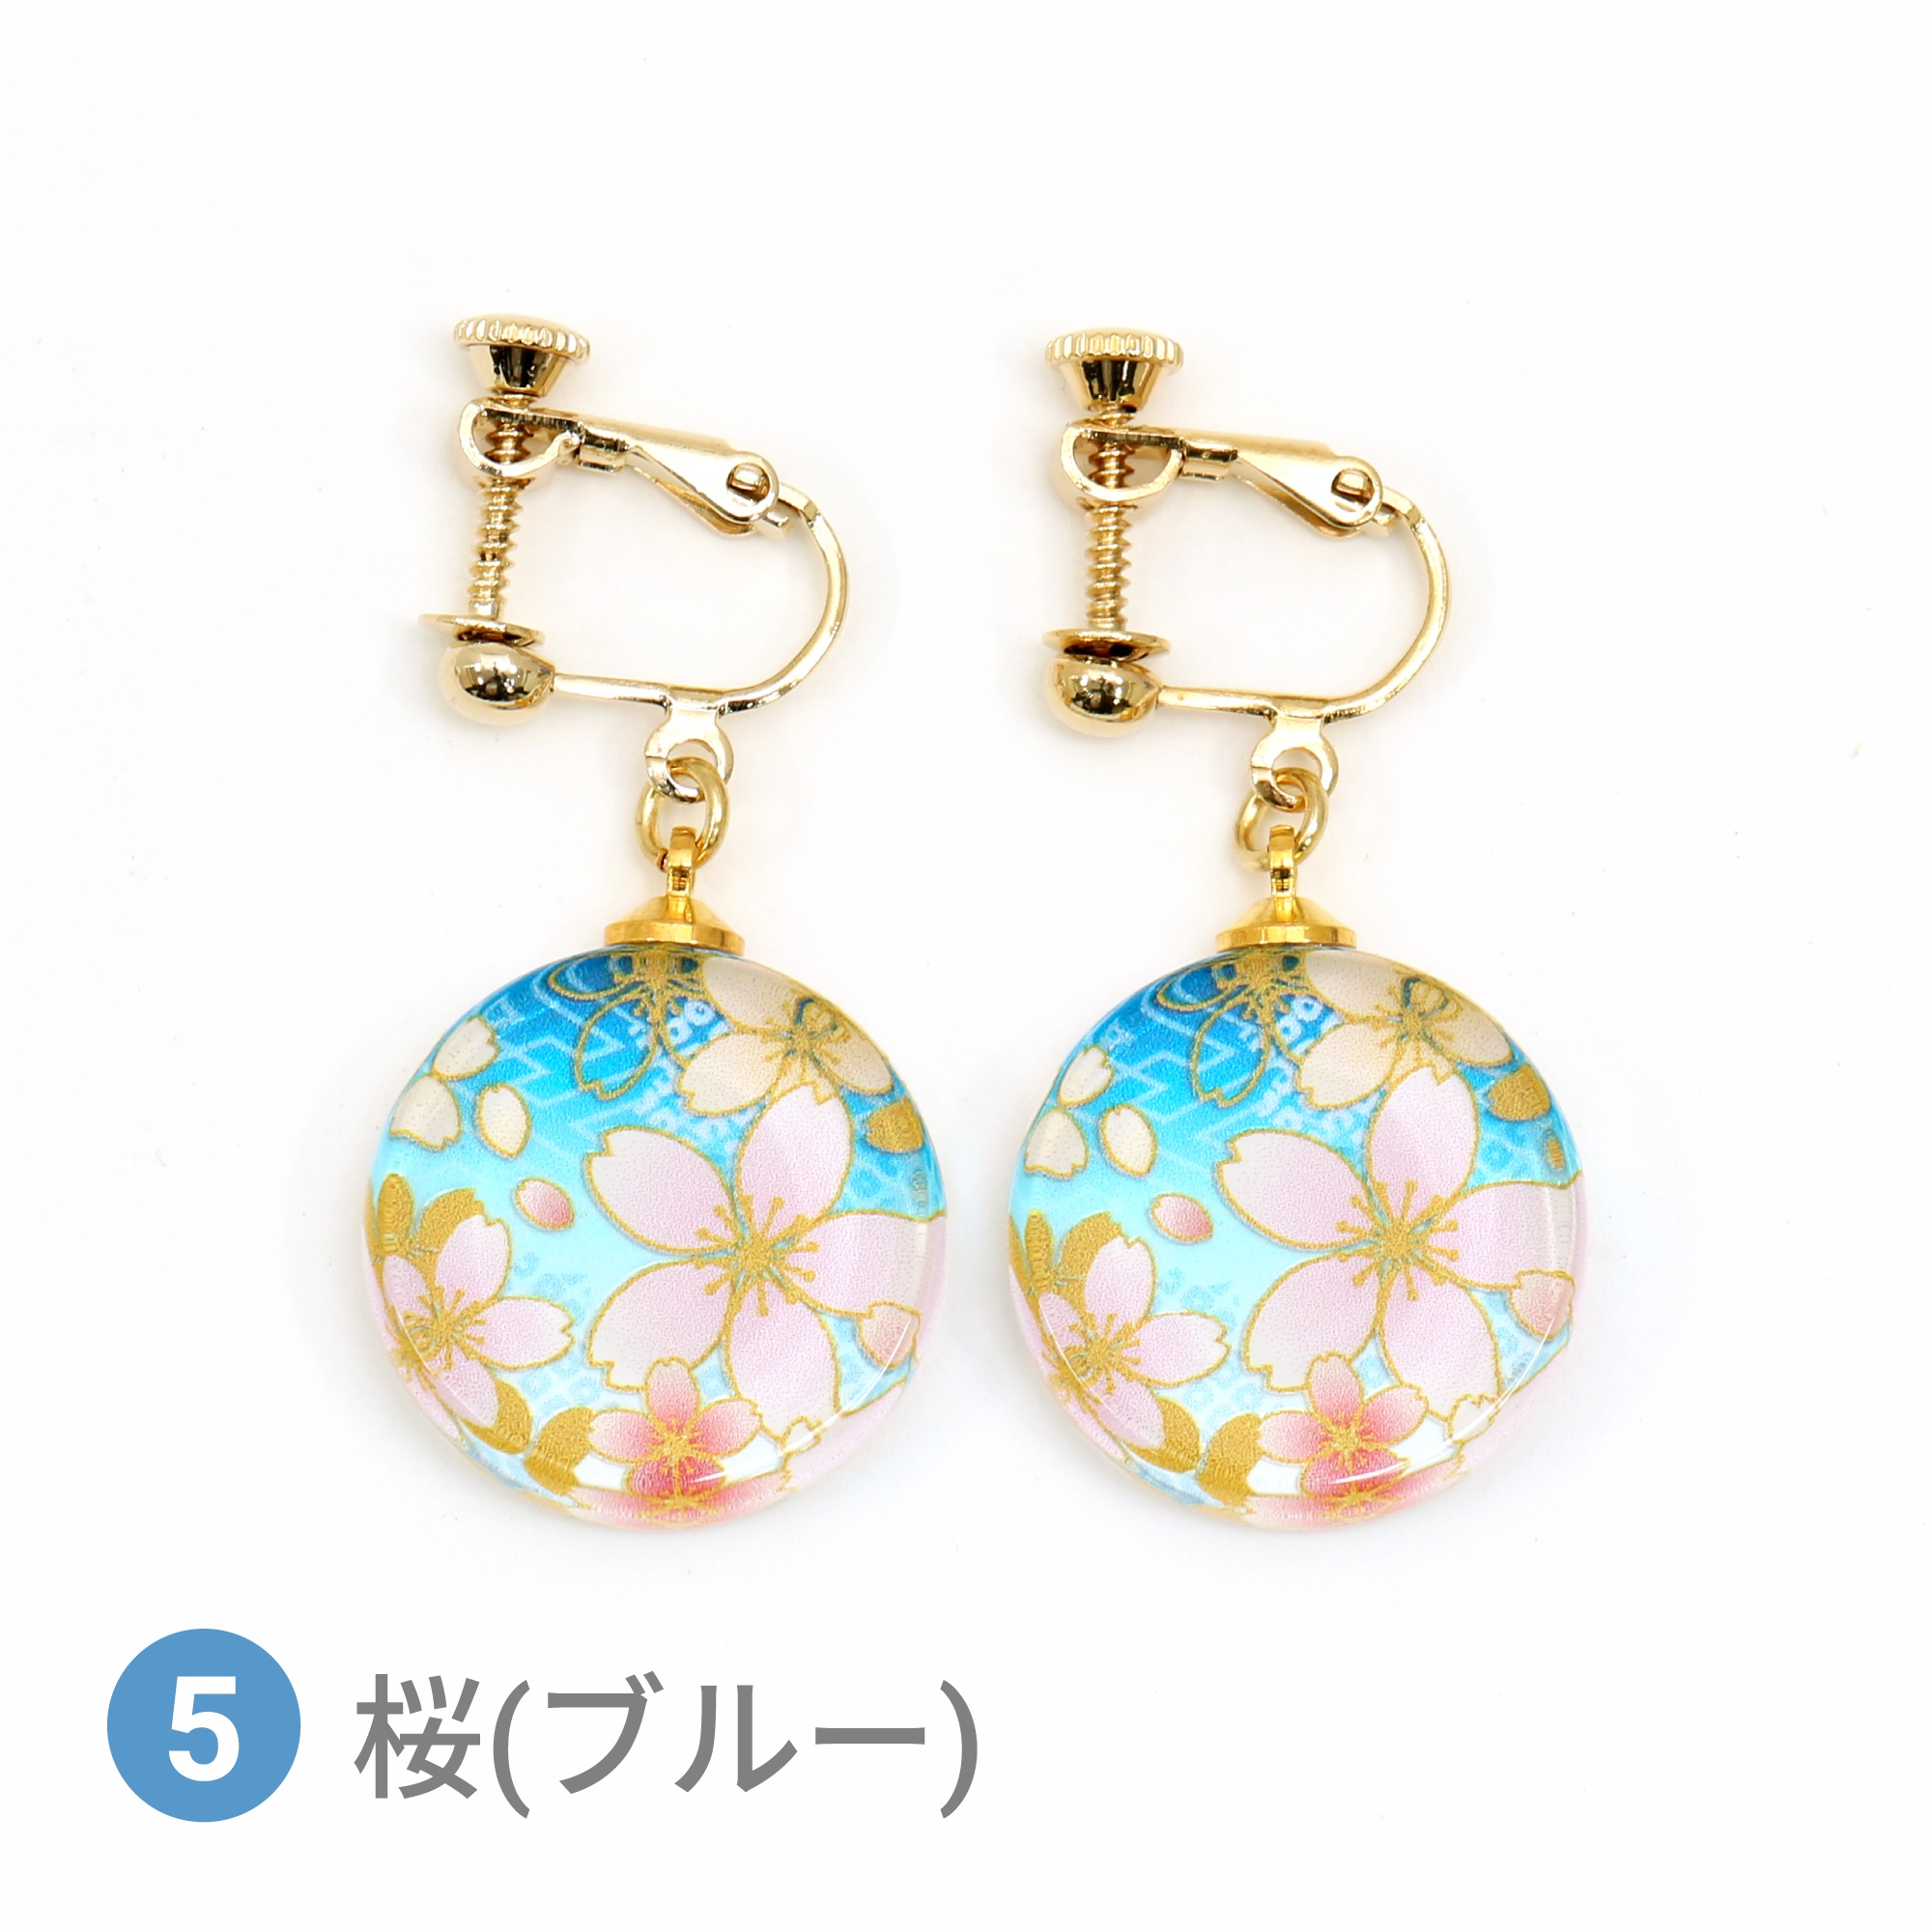 Glass accessories Earring WABANA Cherry blossom blue round shape